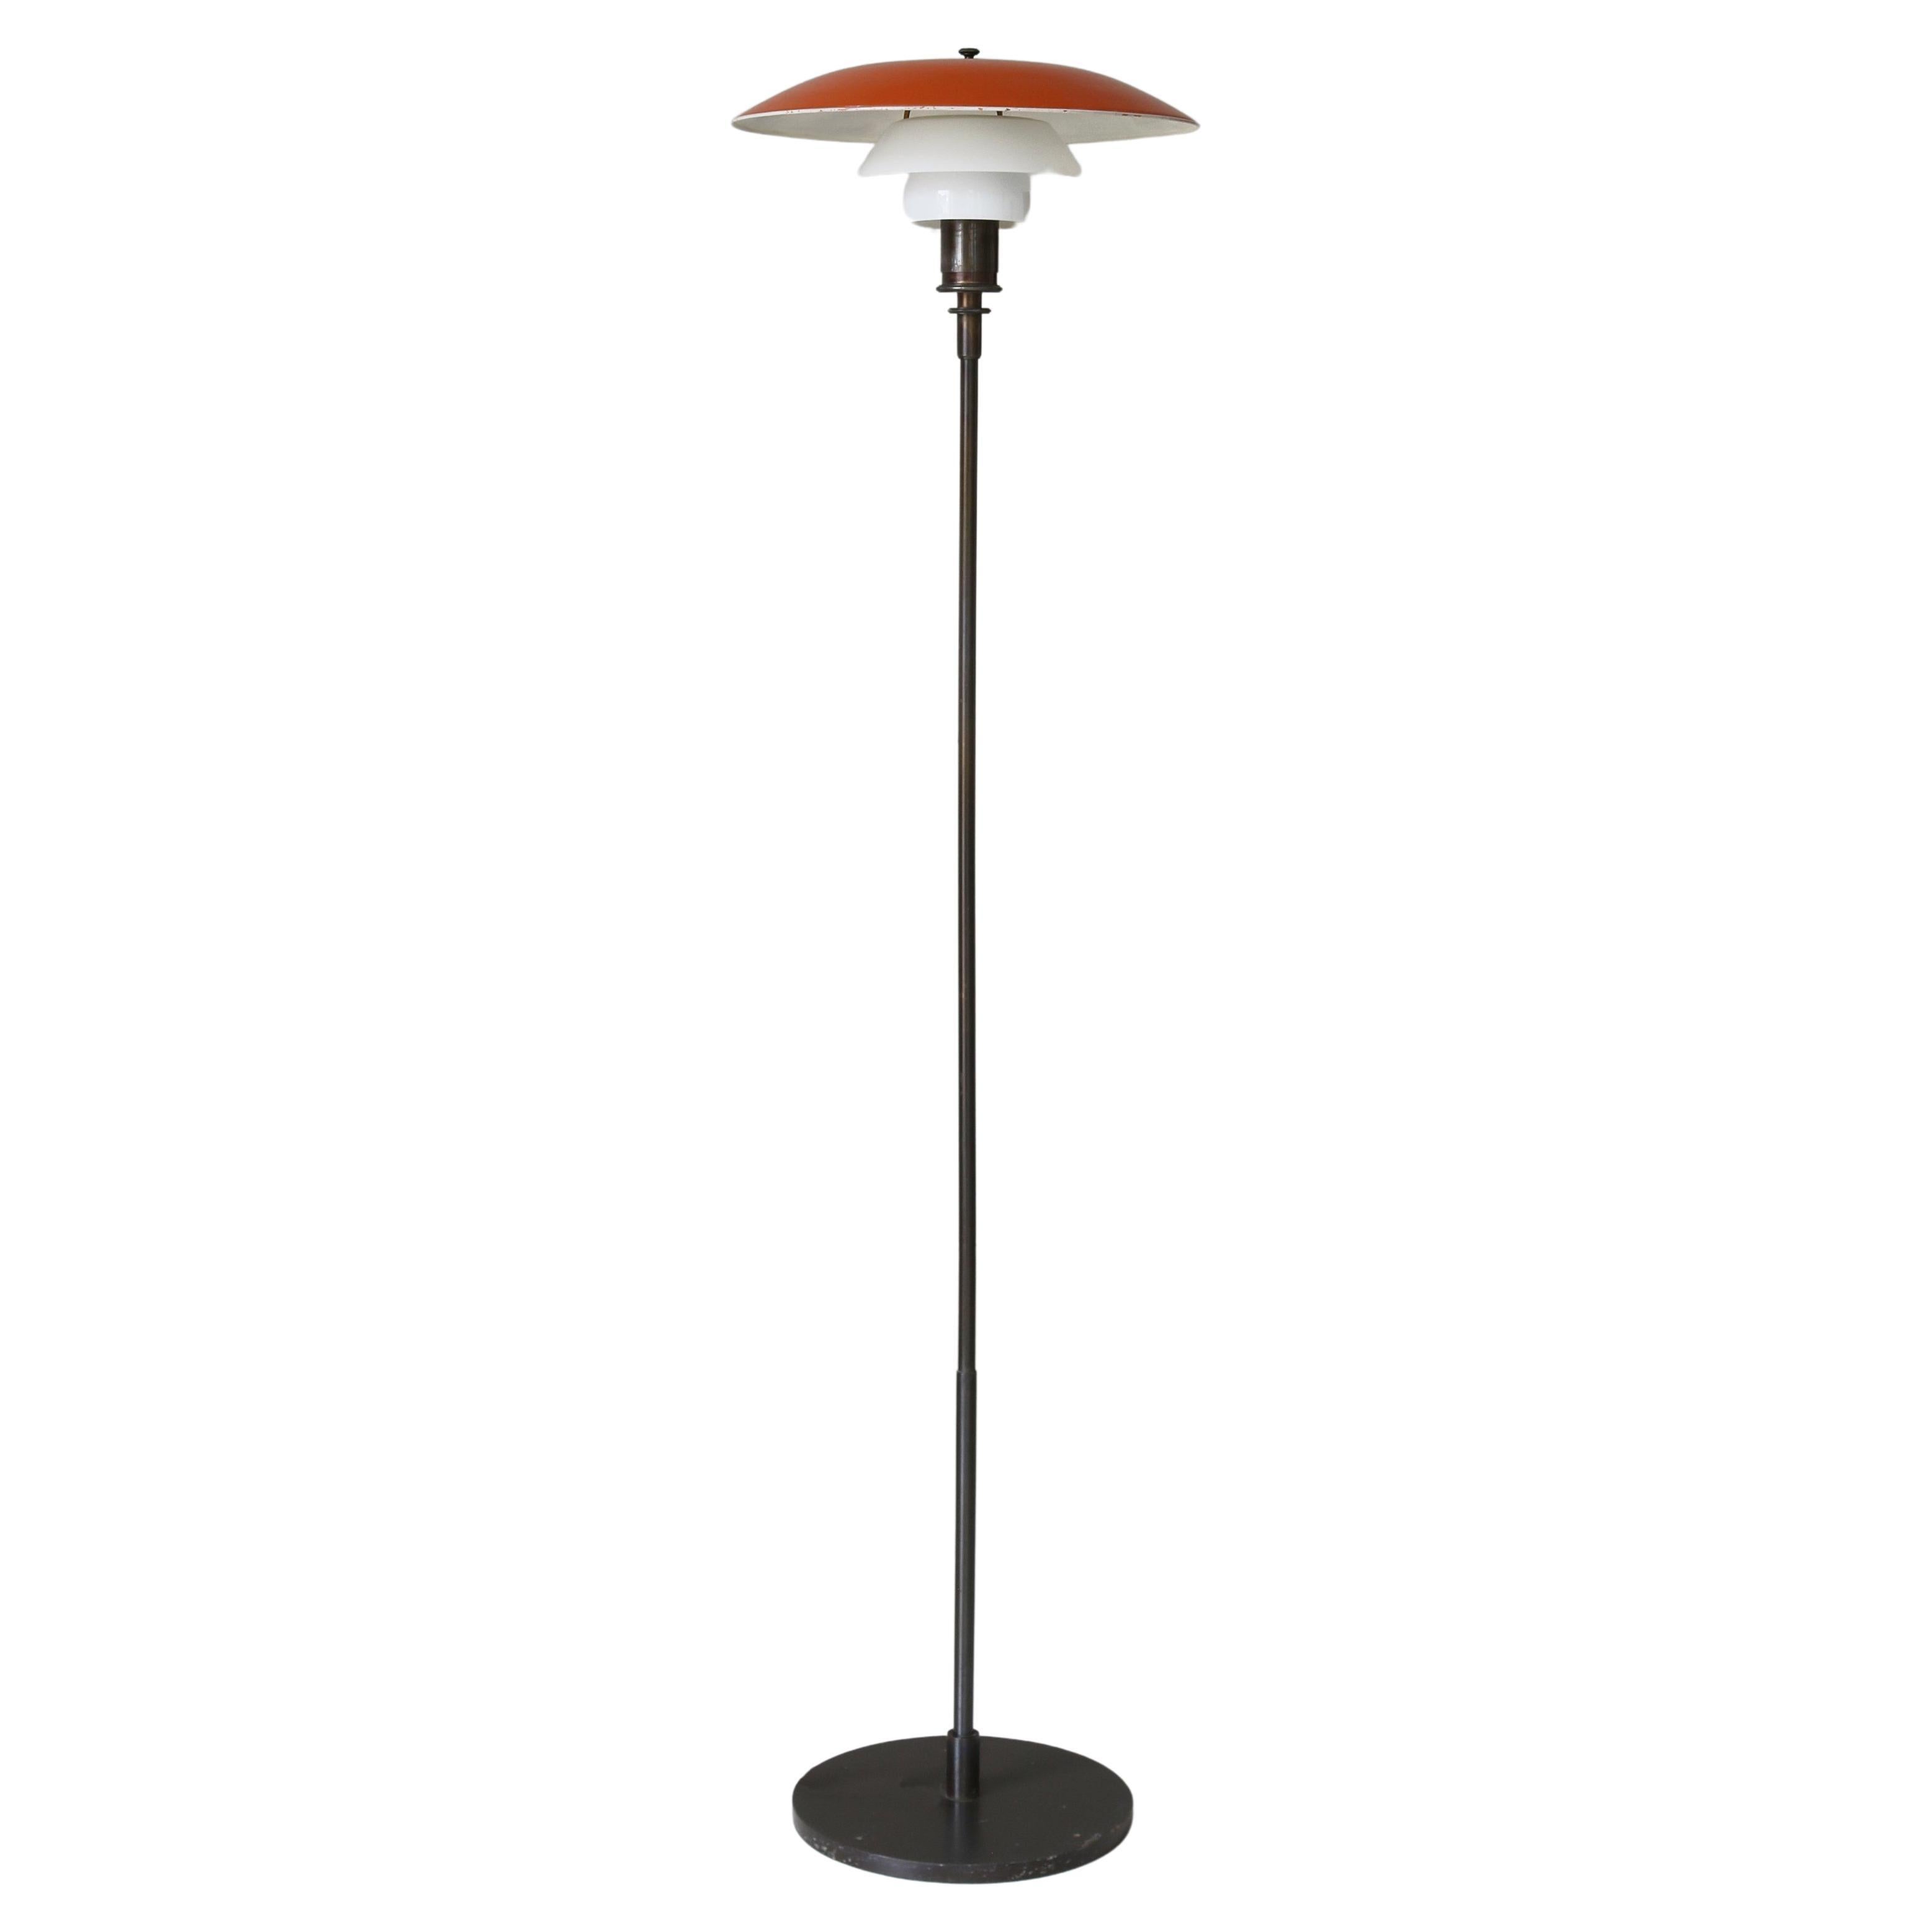 Early Floor Lamp "PH 4/3" by Poul Henningsen, Pat. Appl., Louis Poulsen, 1926-28